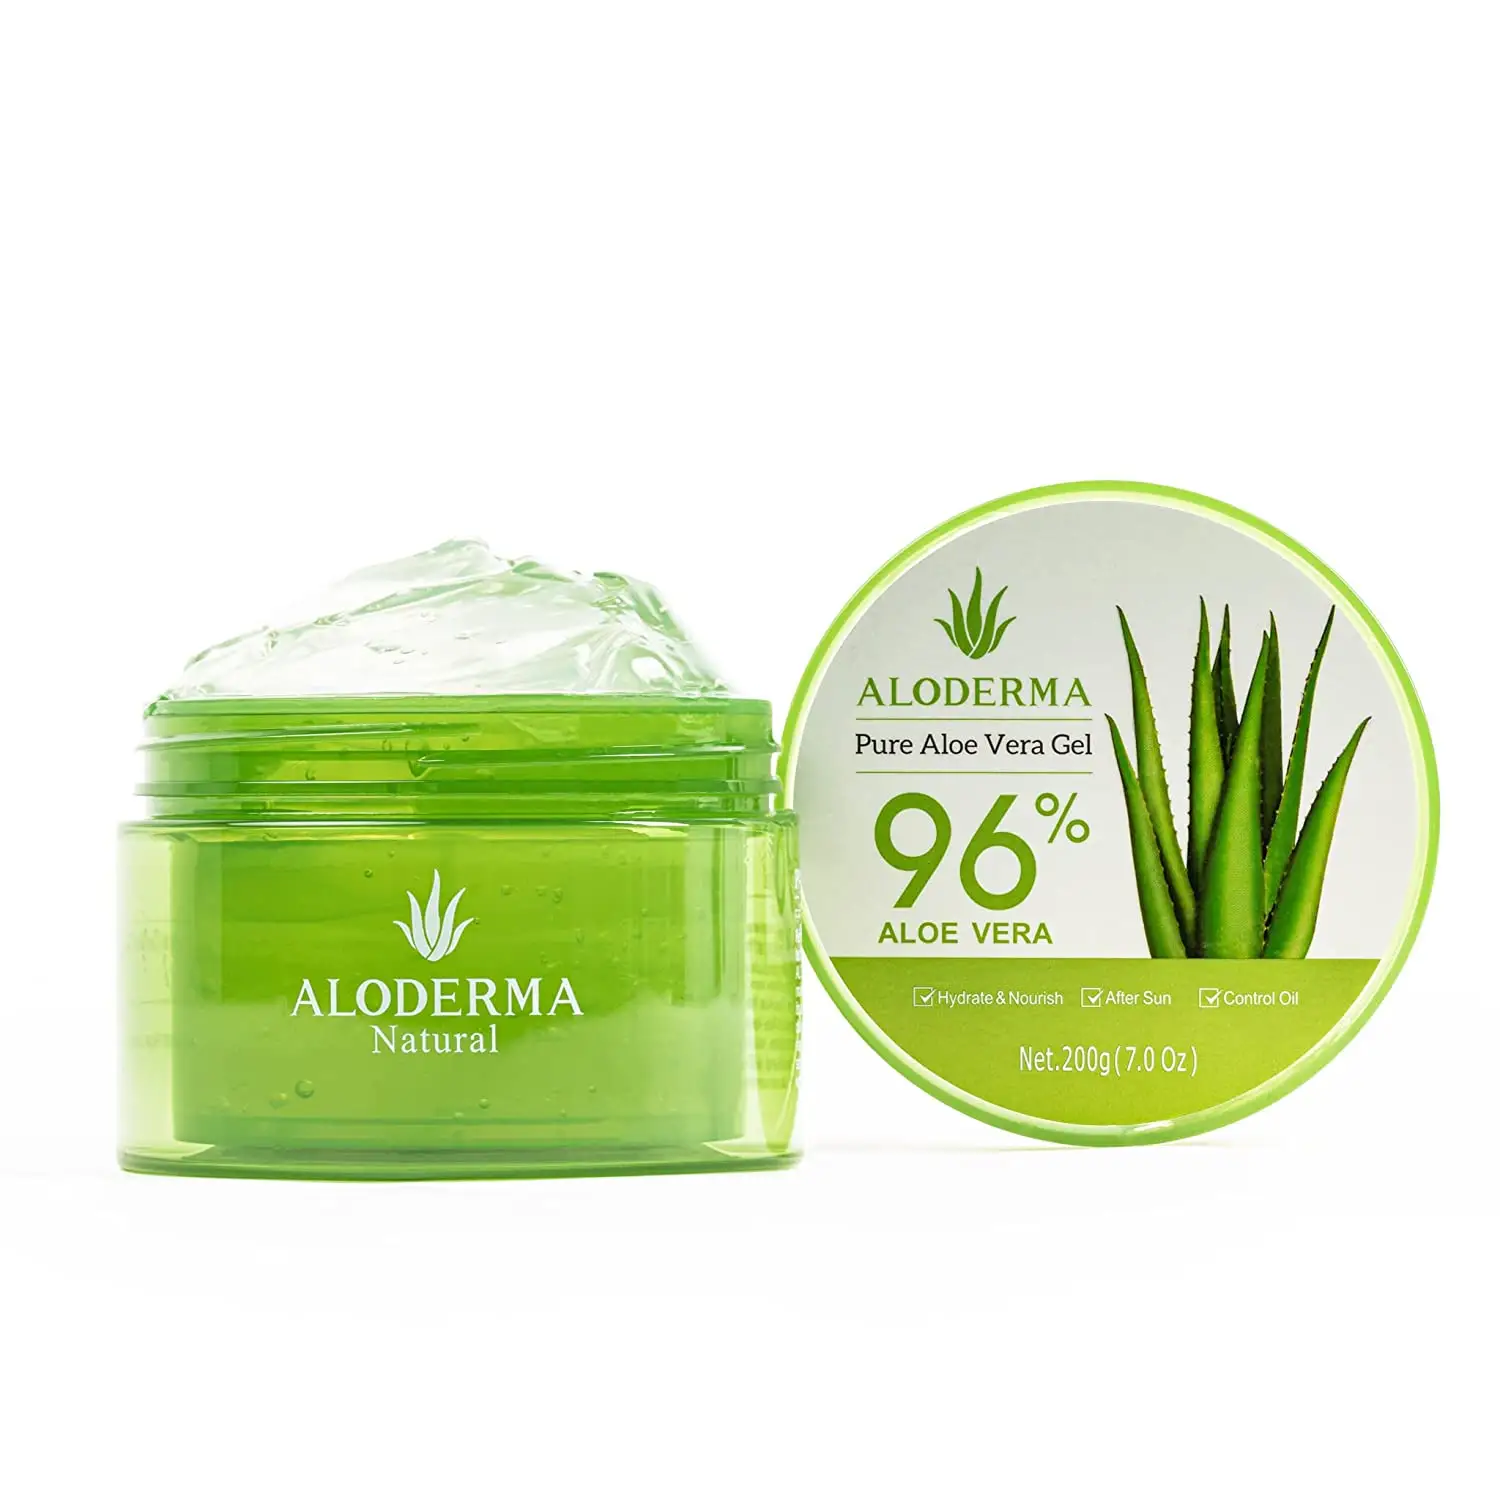 Bio Pure Aloe Vera Gel Private Label Akne Hautpflege New Hydrat ing Beruhigende für immer lebende Aloe Vera Gel Clearing Gel